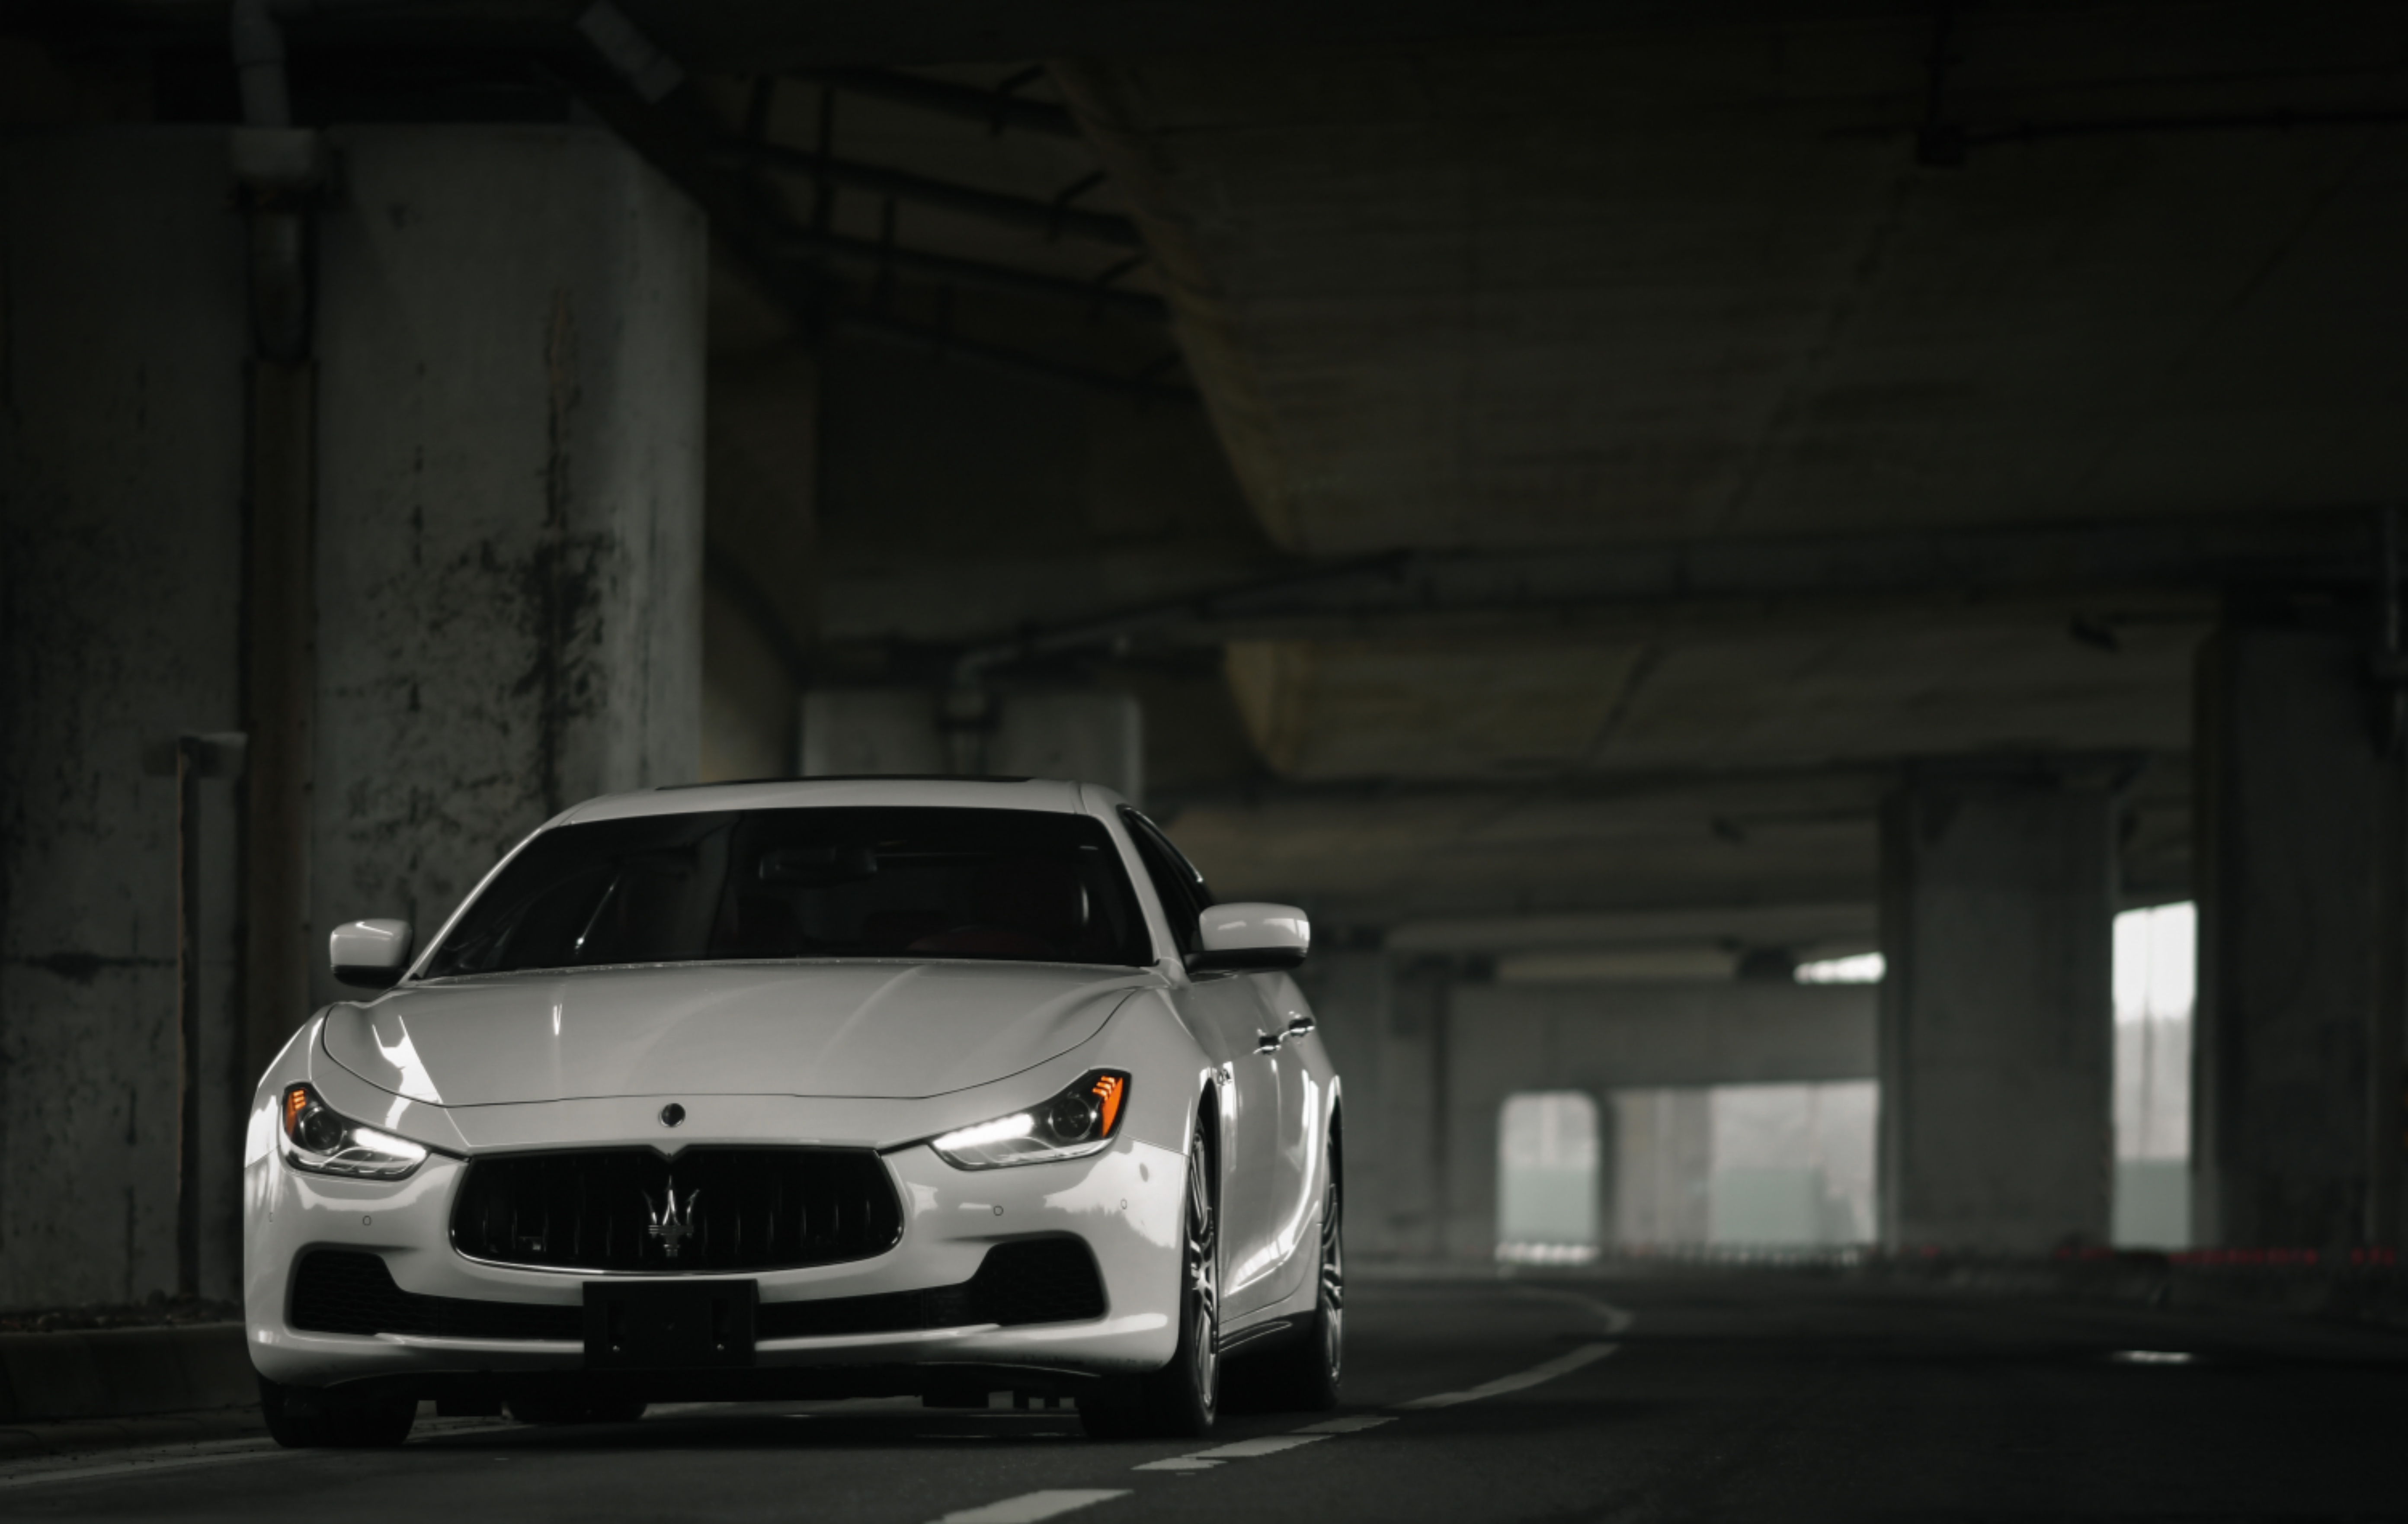 Скачать обои бесплатно Белый, Maserati Ghibli, Мазератти (Maserati), Тачки (Cars), Движение, Вид Спереди картинка на рабочий стол ПК